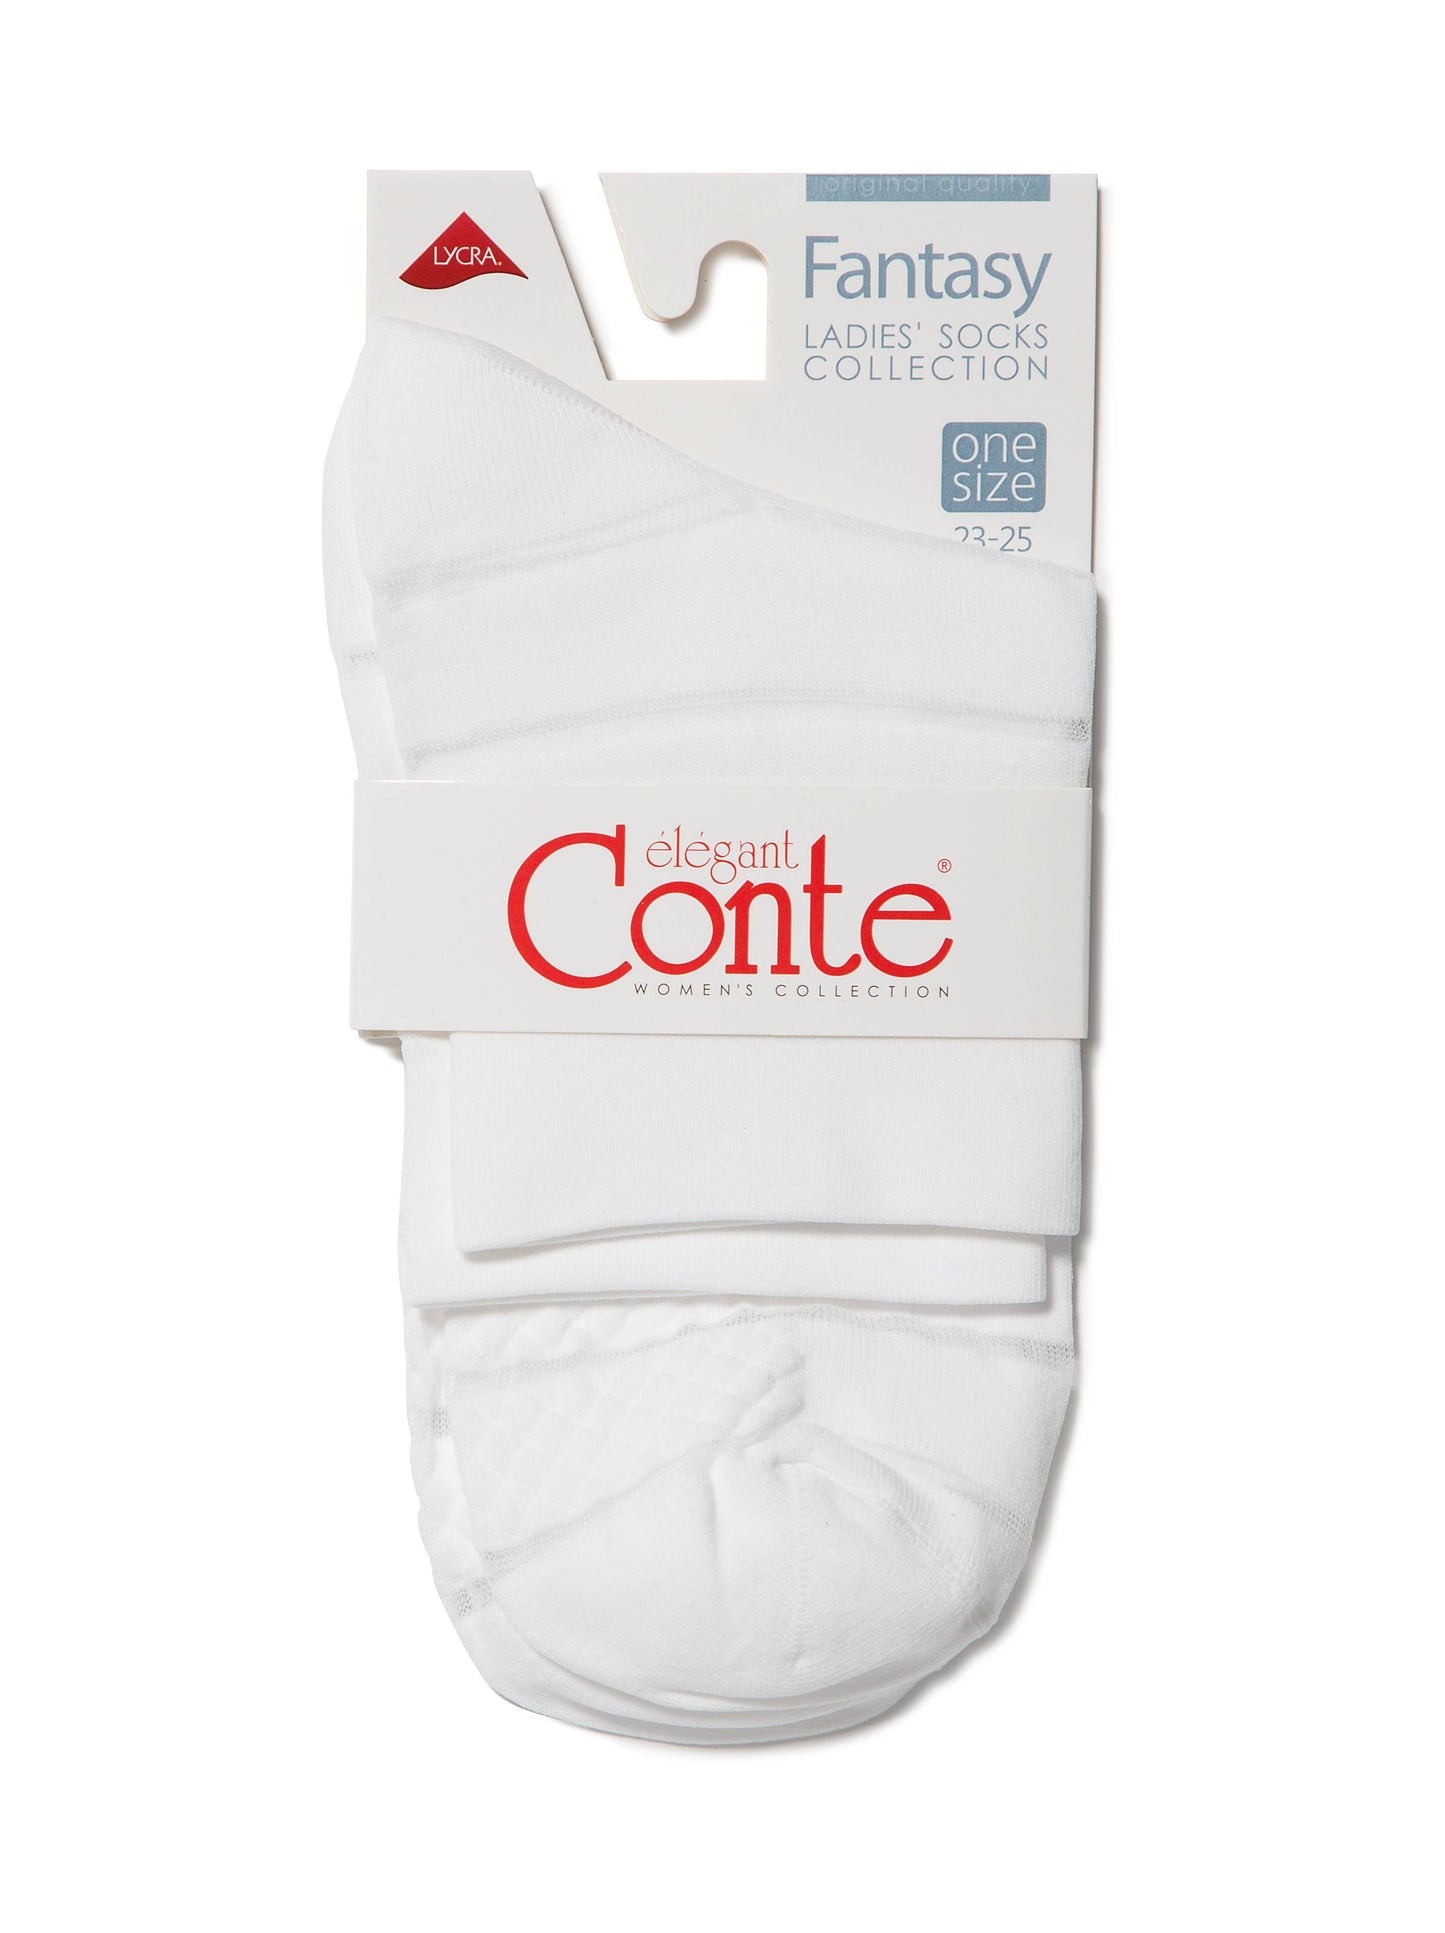 Conte Fantasy #16С-85СП - Lot of 2 pairs Polyamide Women's Socks